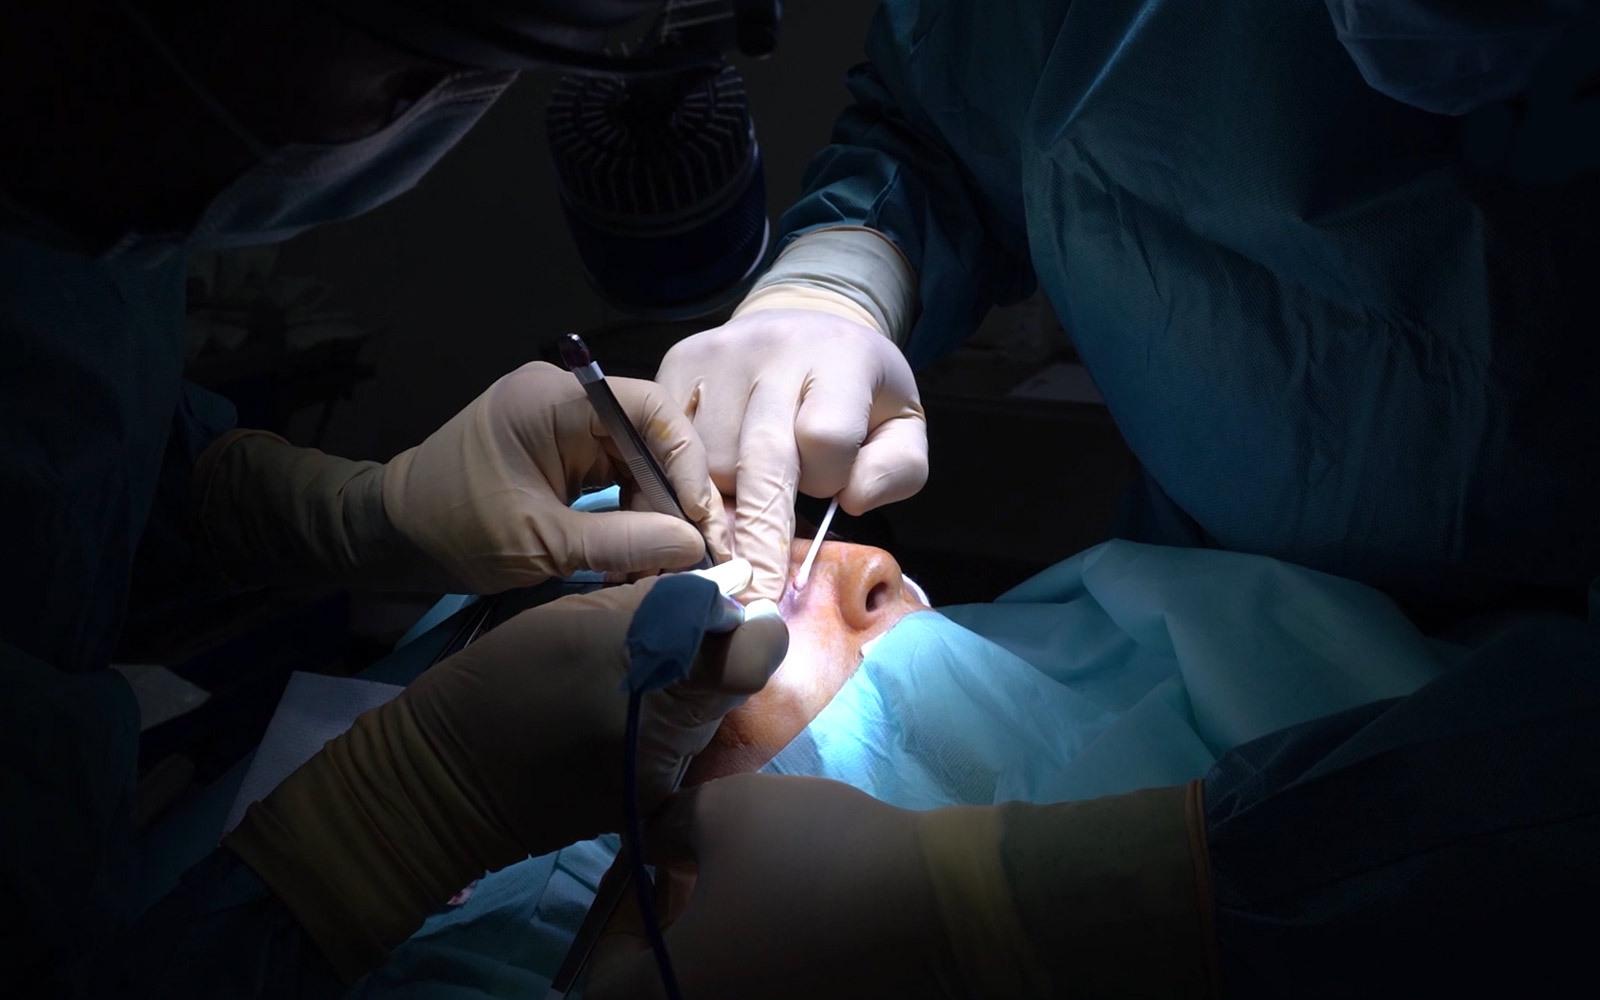 Blefaroplastia o cirugía de párpados